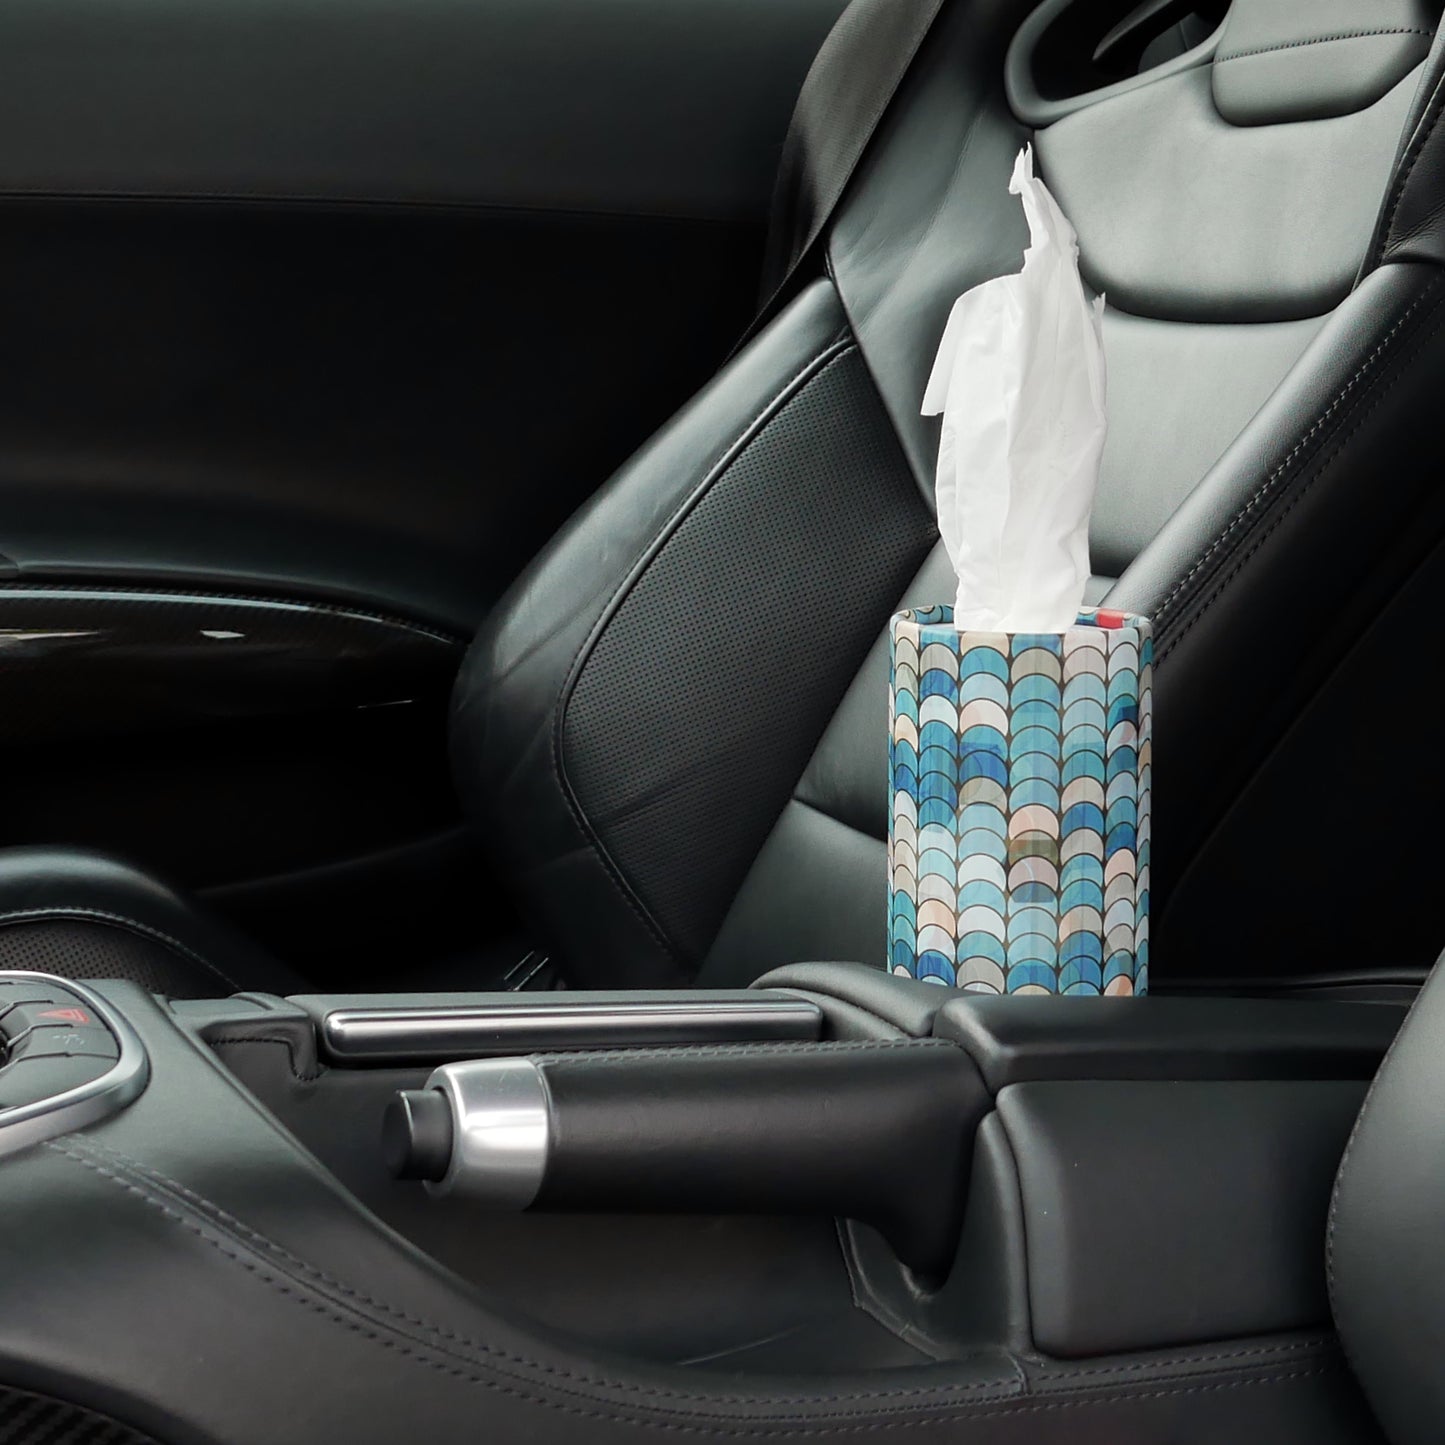 tishoo Luxury Tissues Blue/Scales in car